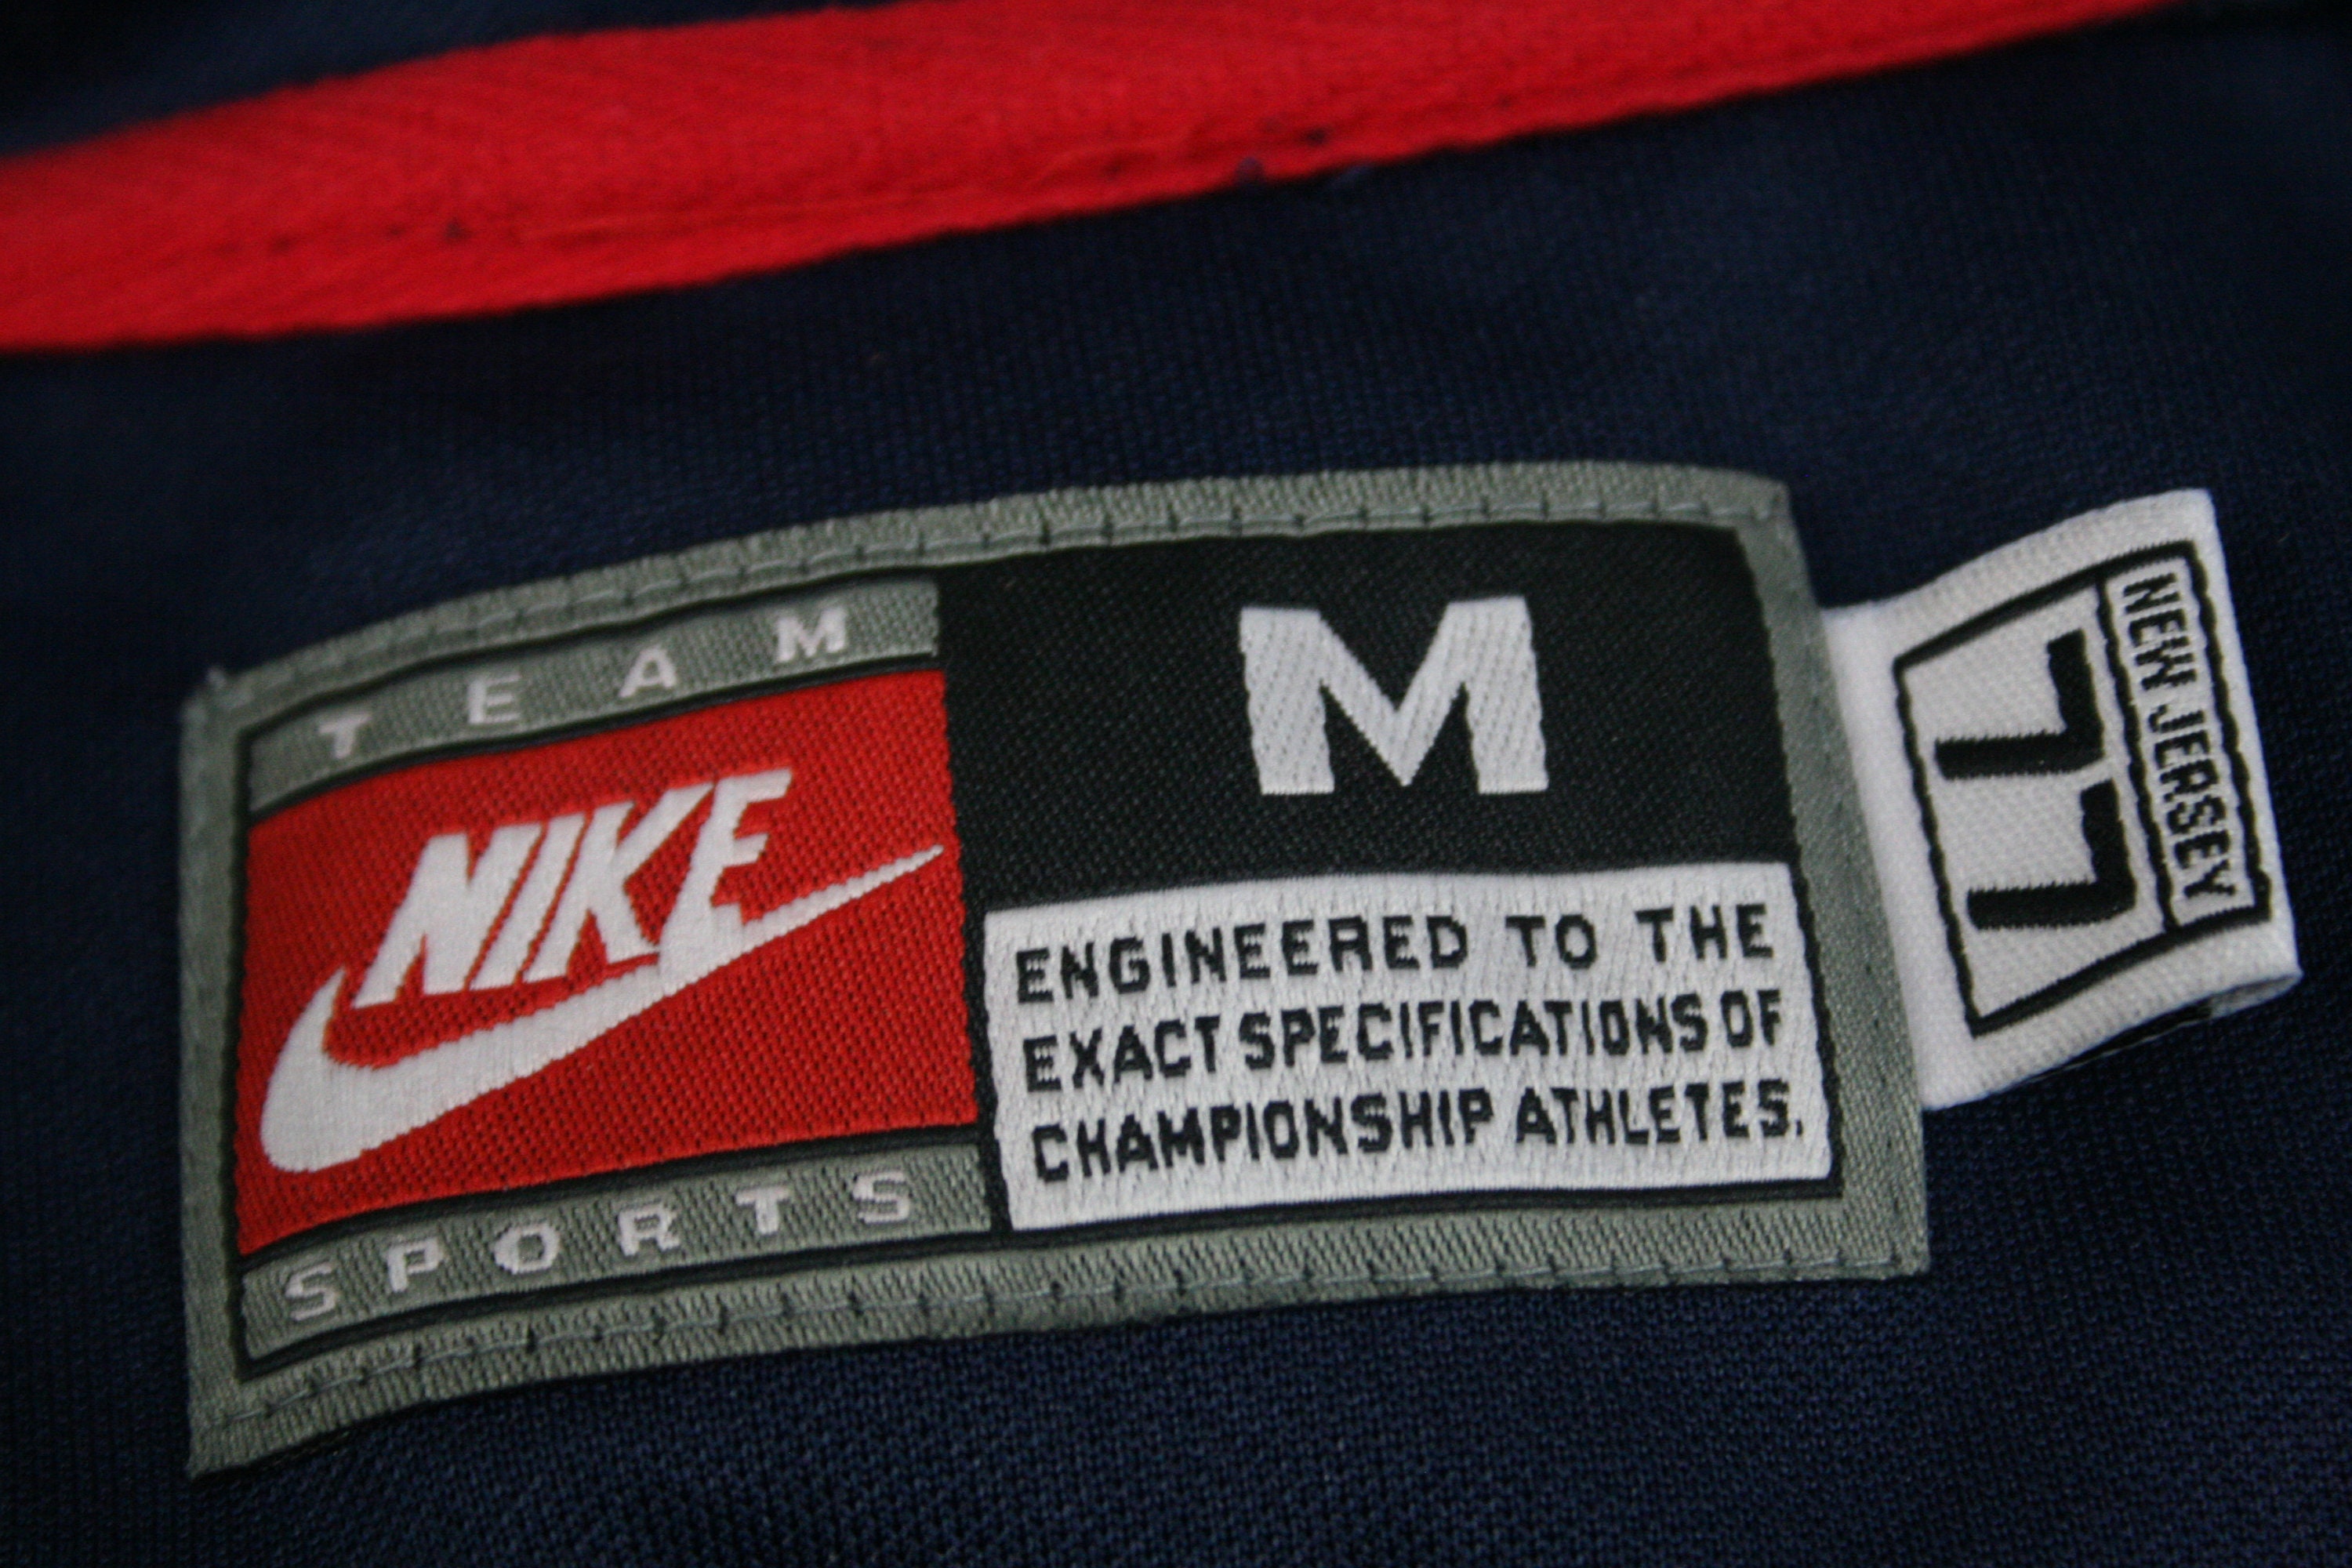 Vintage New Jersey Nets Sweat Suit Nike NBA Boys Track Suit 